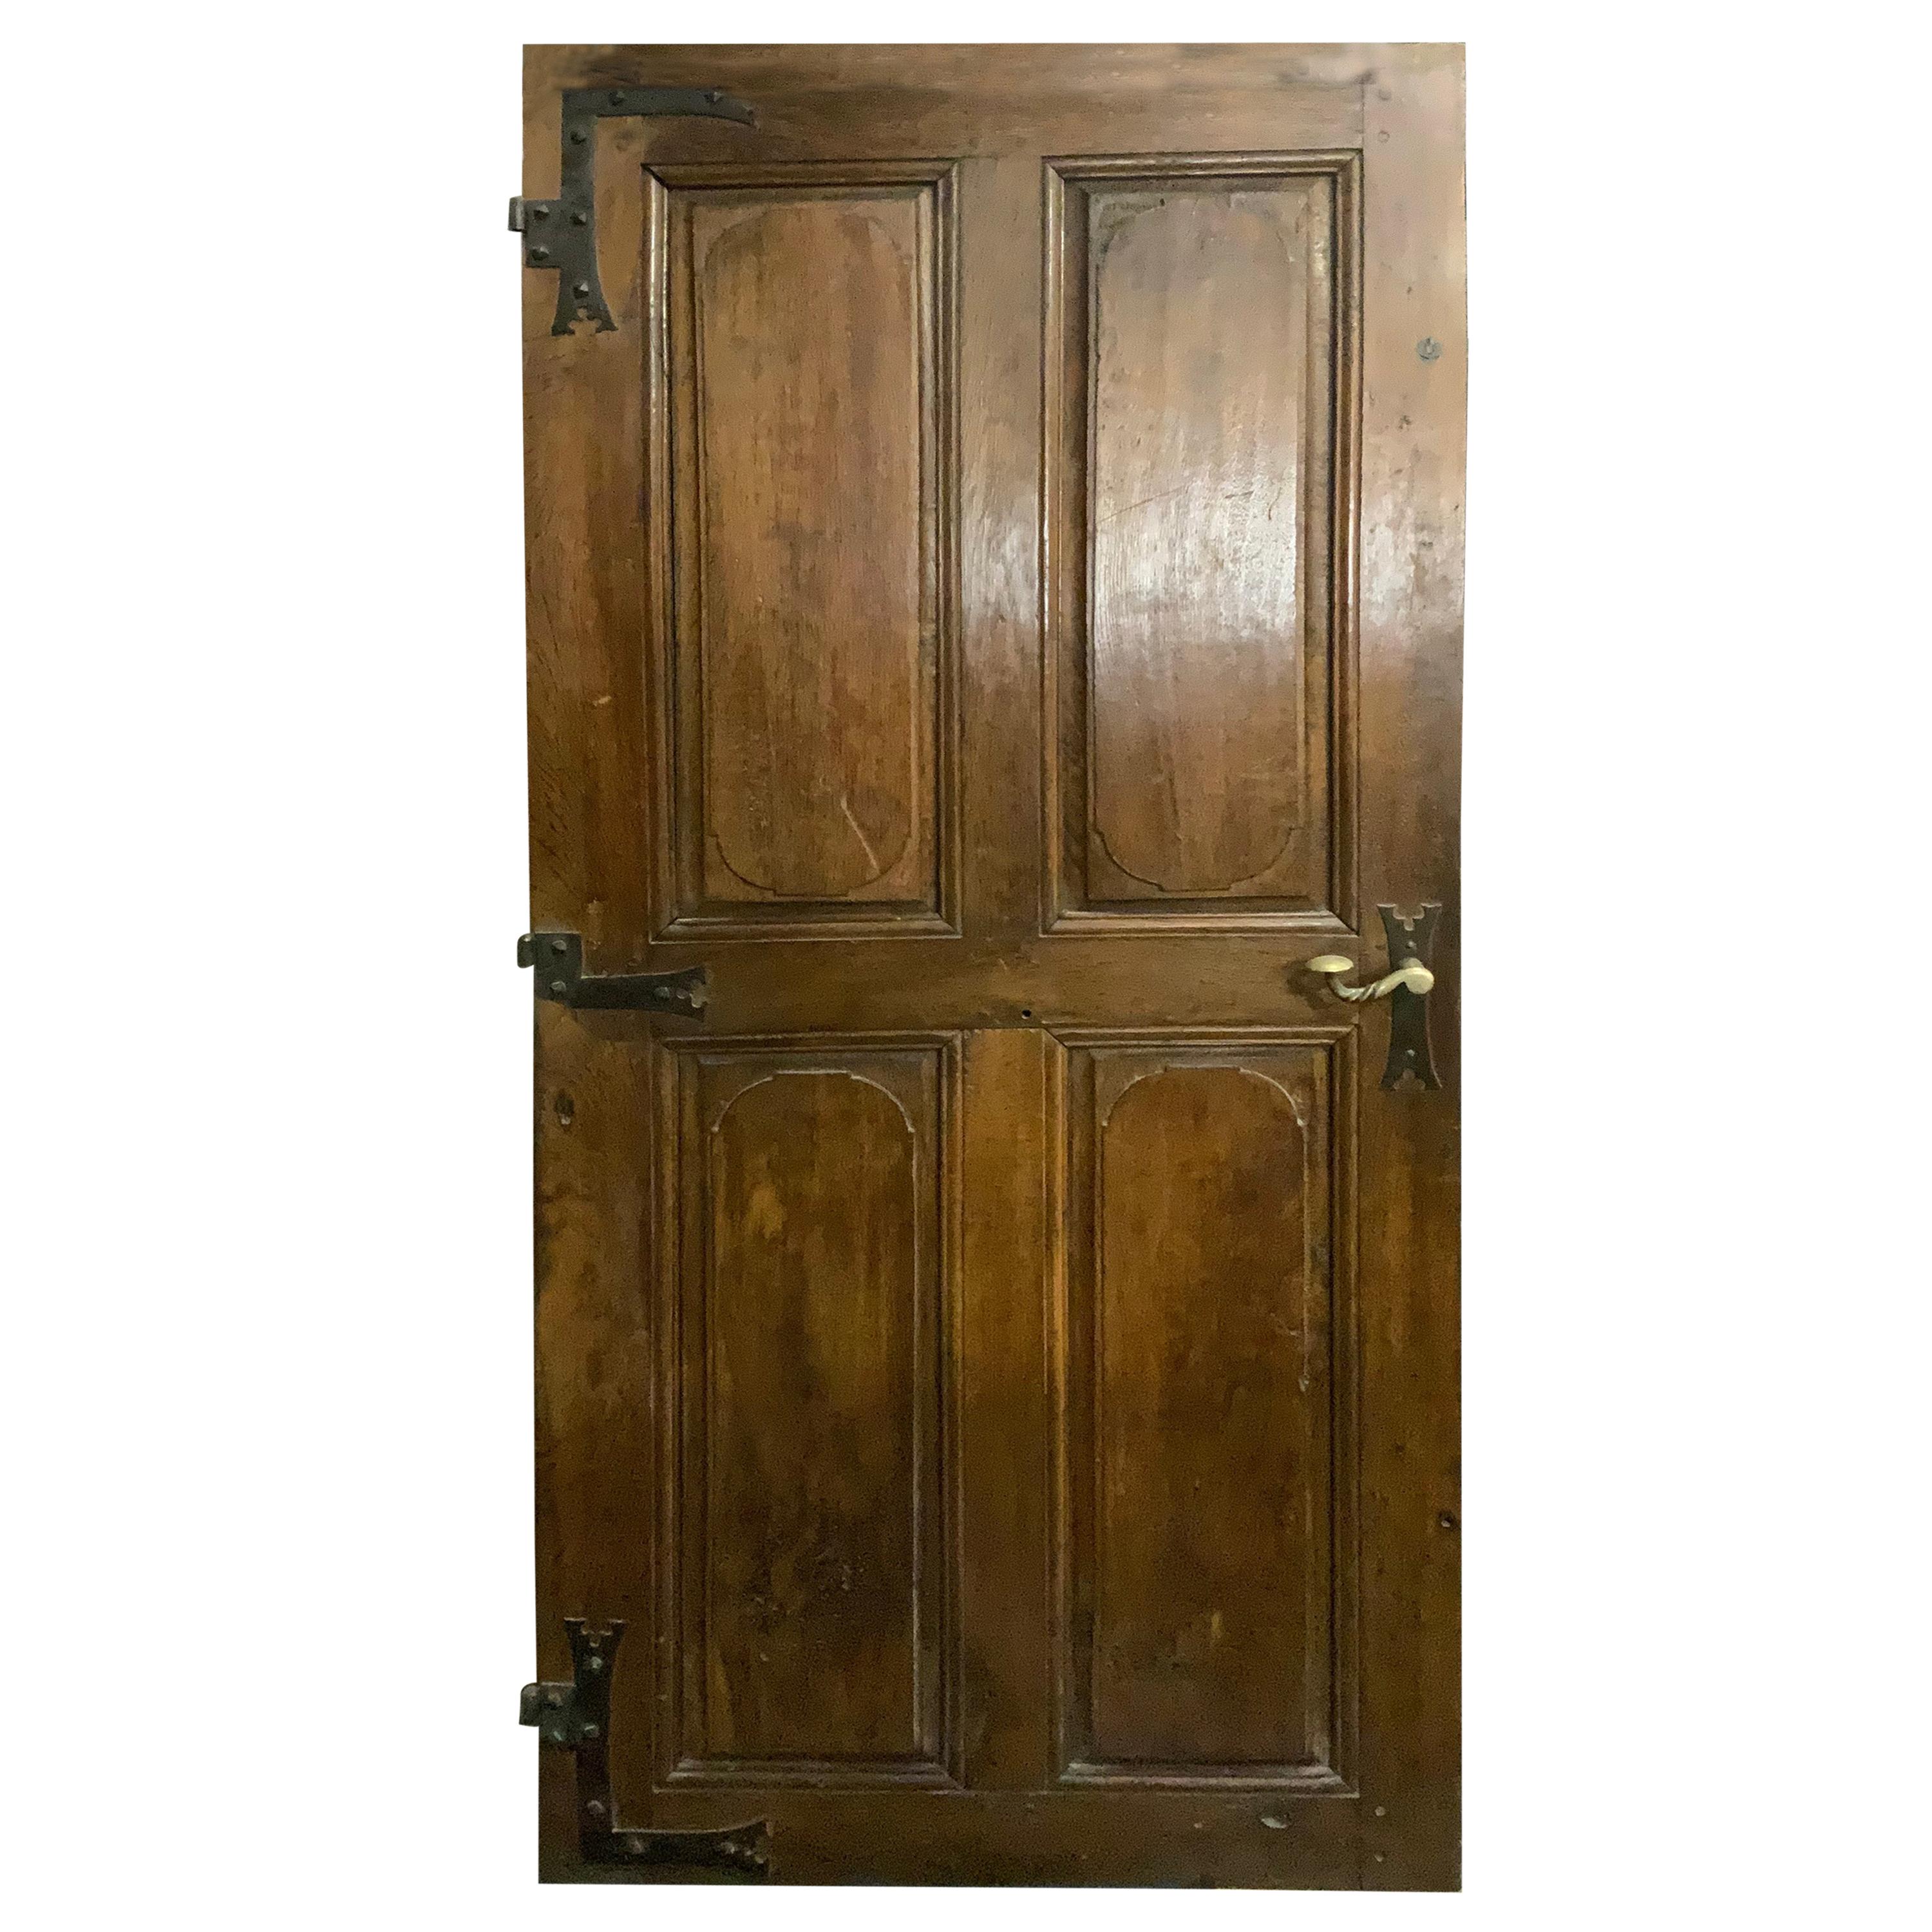 Early 19th Century Oak Door from France